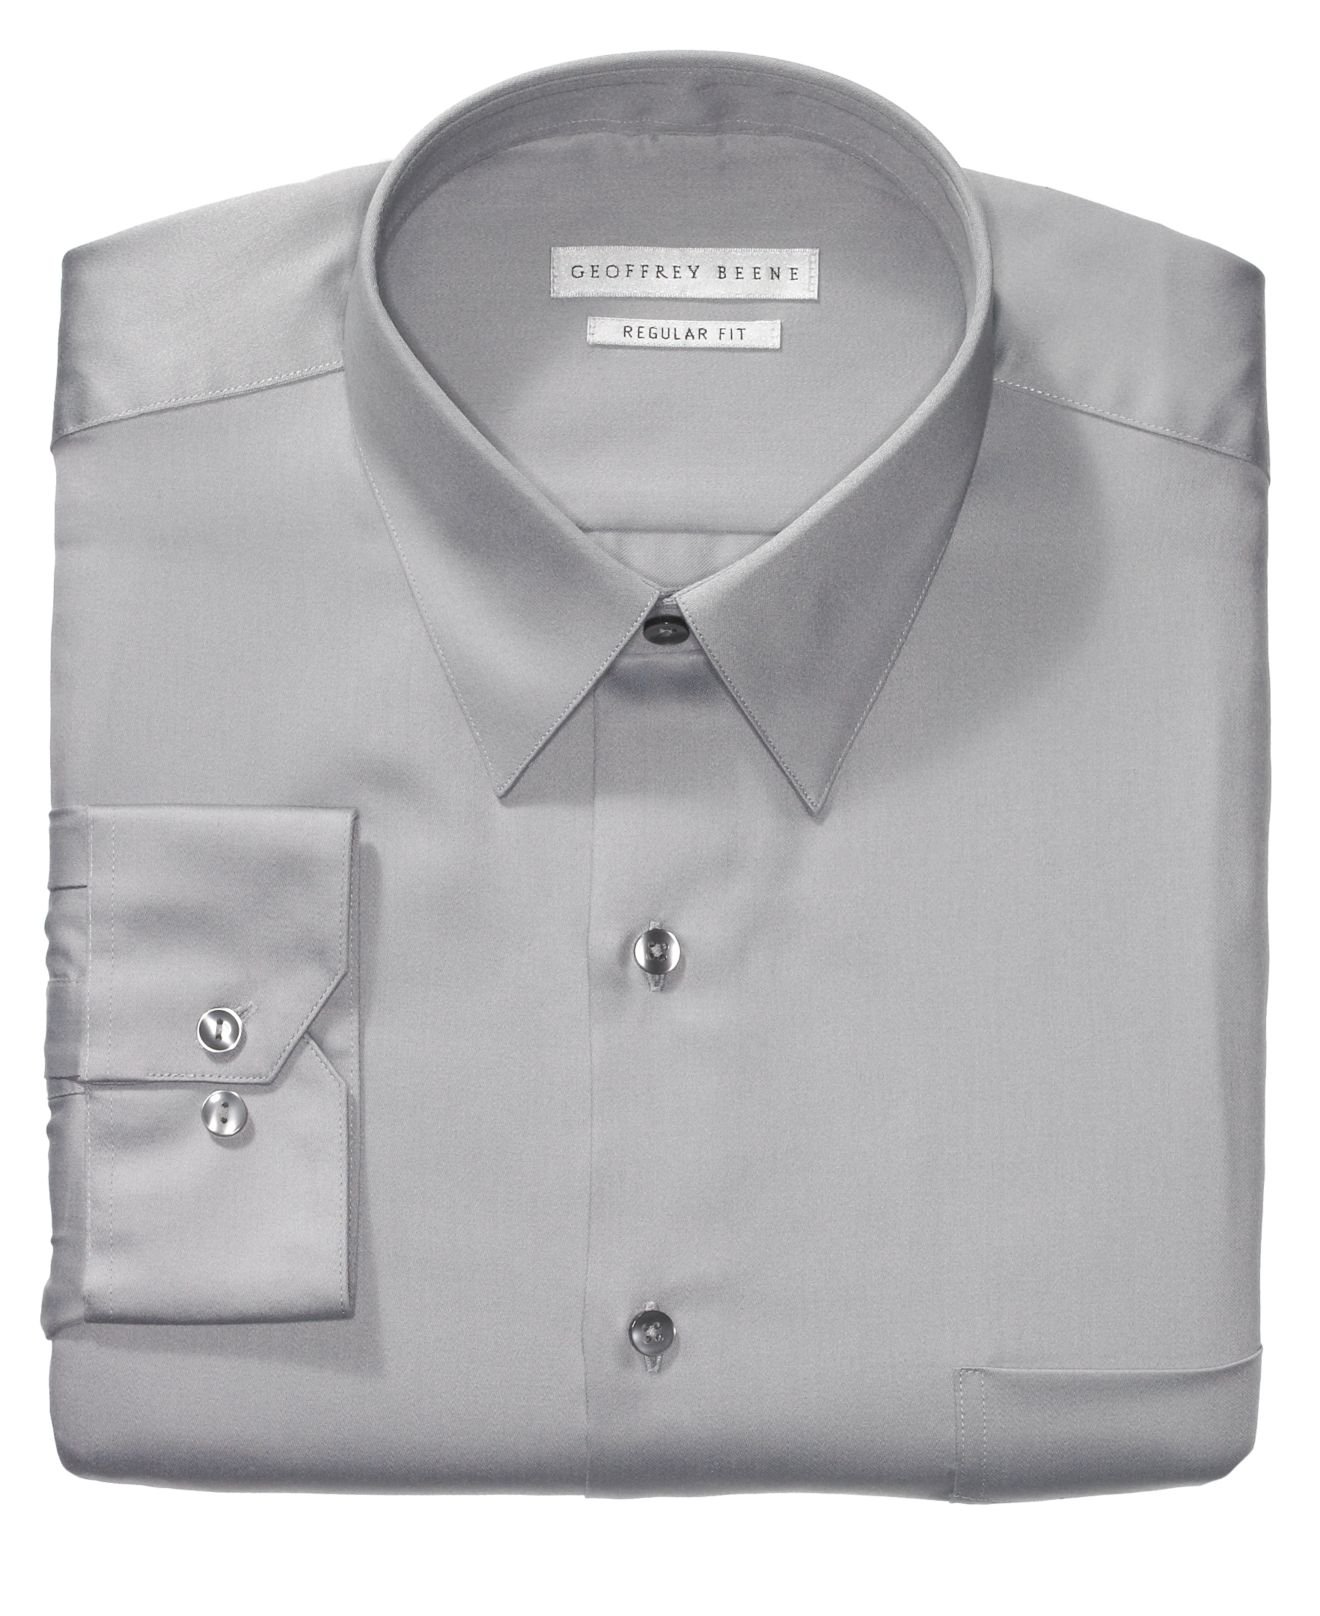 Geoffrey Beene Mens Regular Fit Sateen Solid Shirt